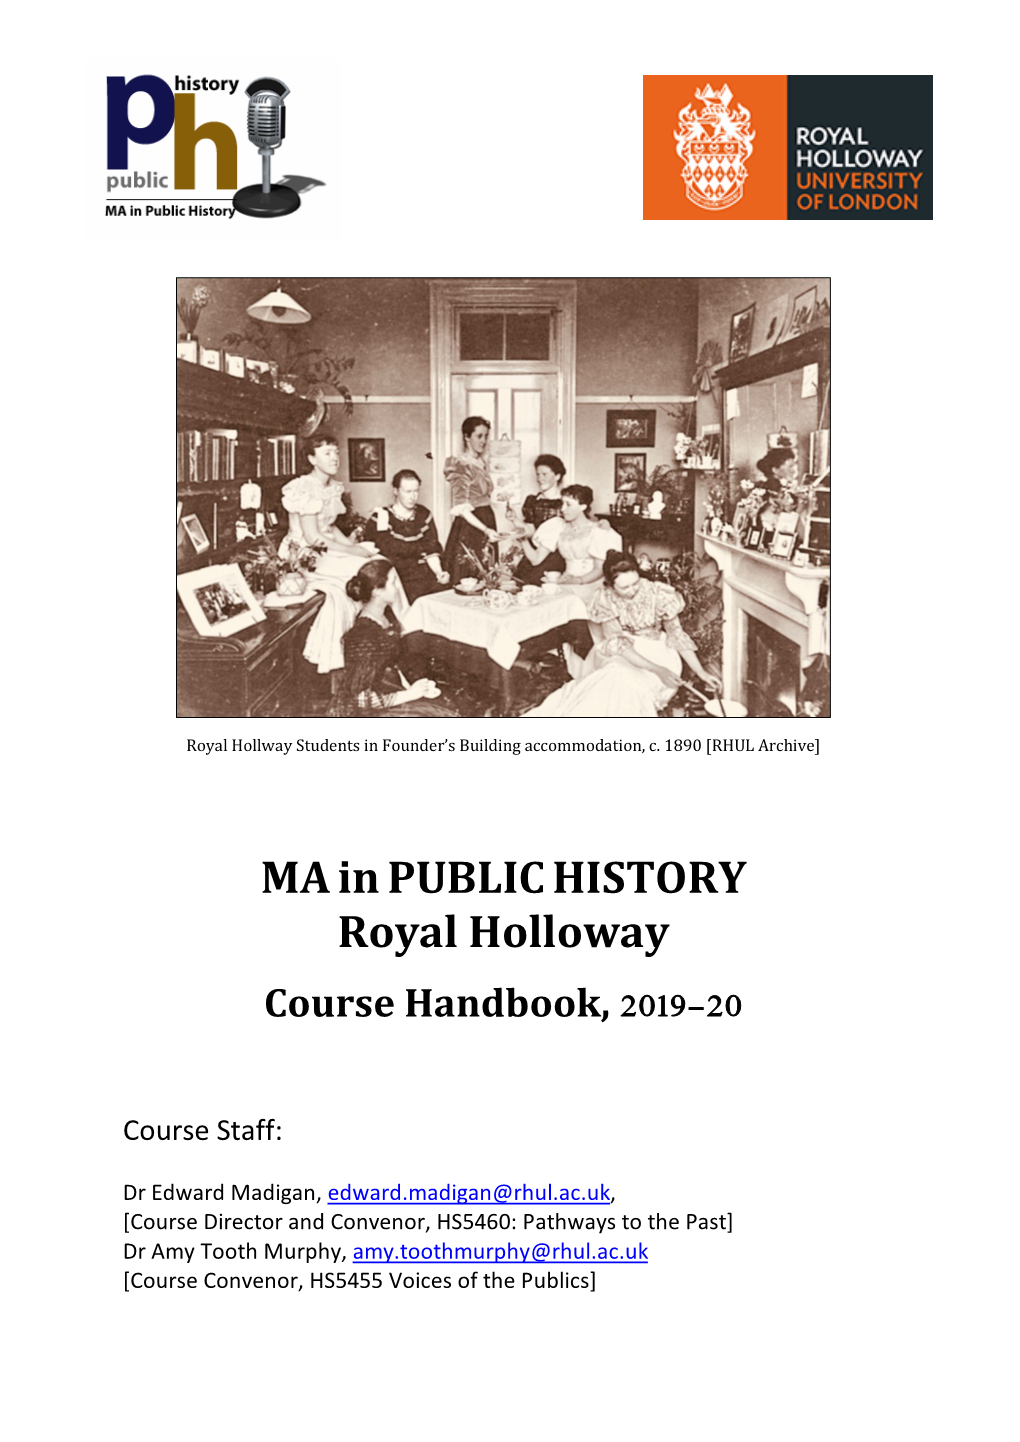 Ma-Public-History-Handbook-2019-20.Pdf